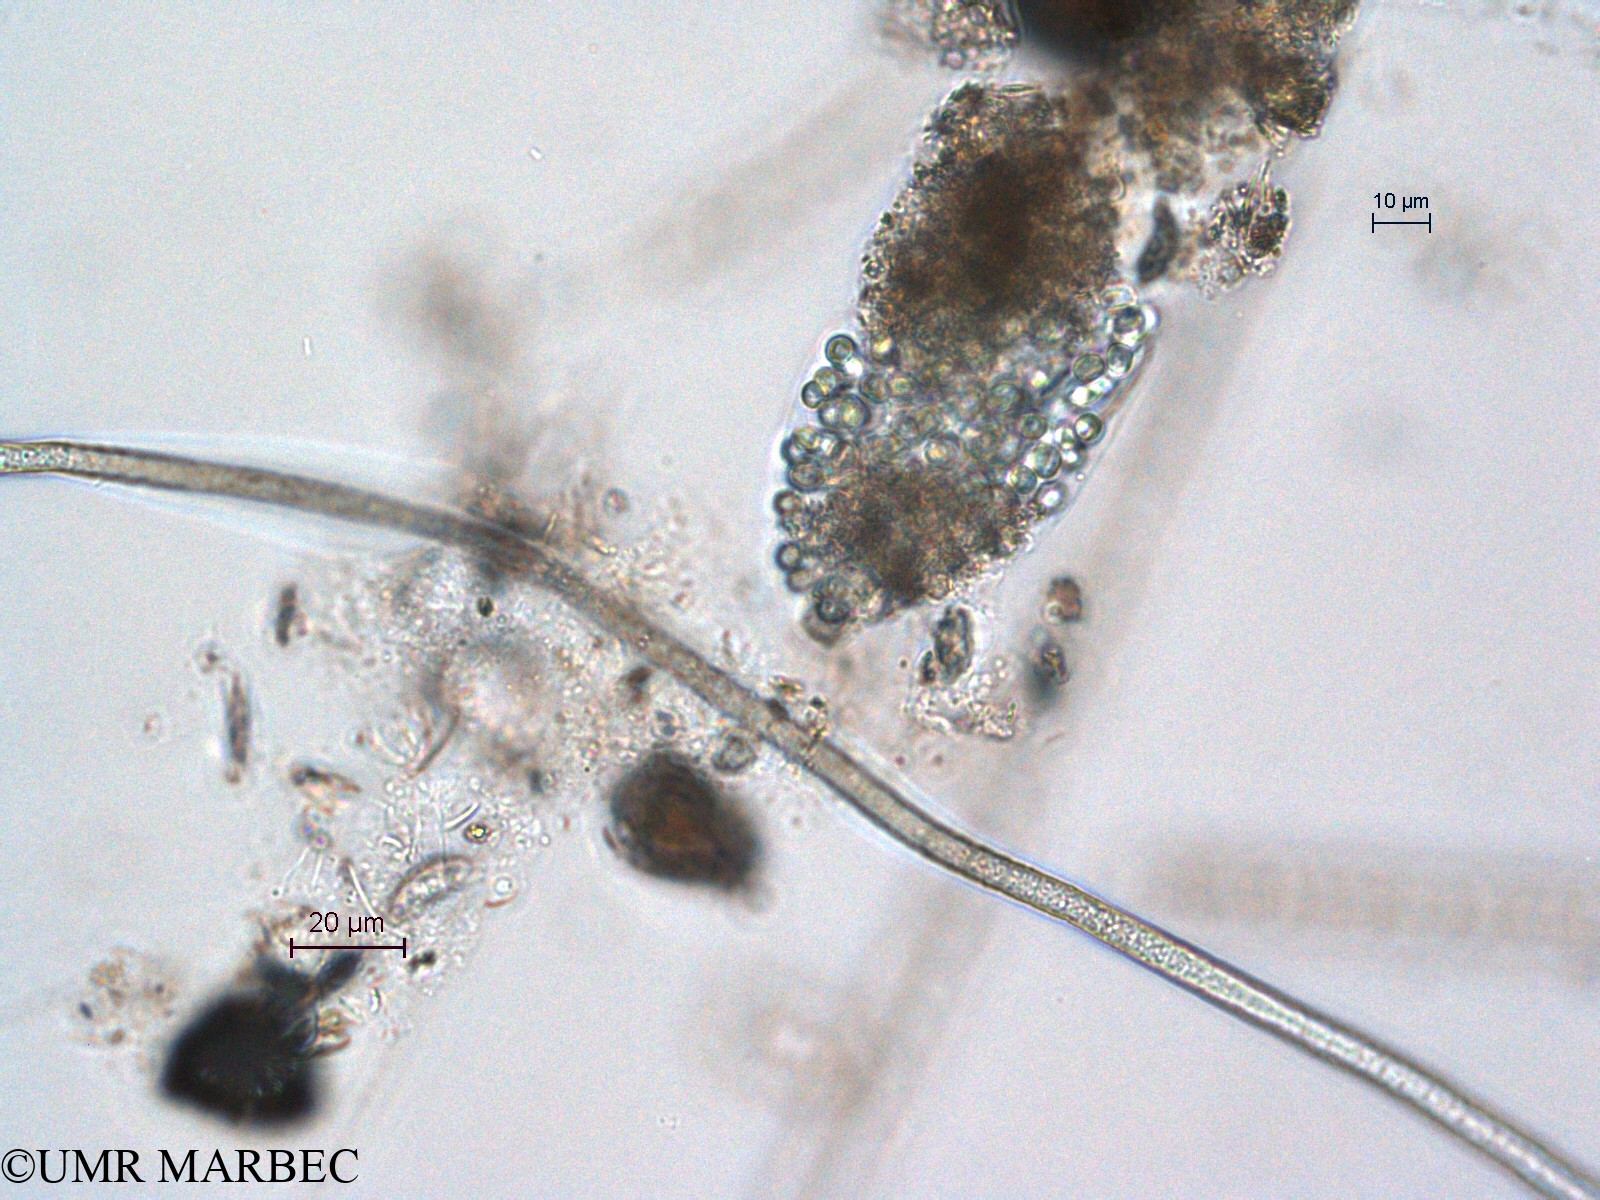 phyto/Scattered_Islands/all/COMMA April 2011/Aphanocapsa sp13 (old Chroococcus sp11 -dans pelotte fécale)(copy).jpg